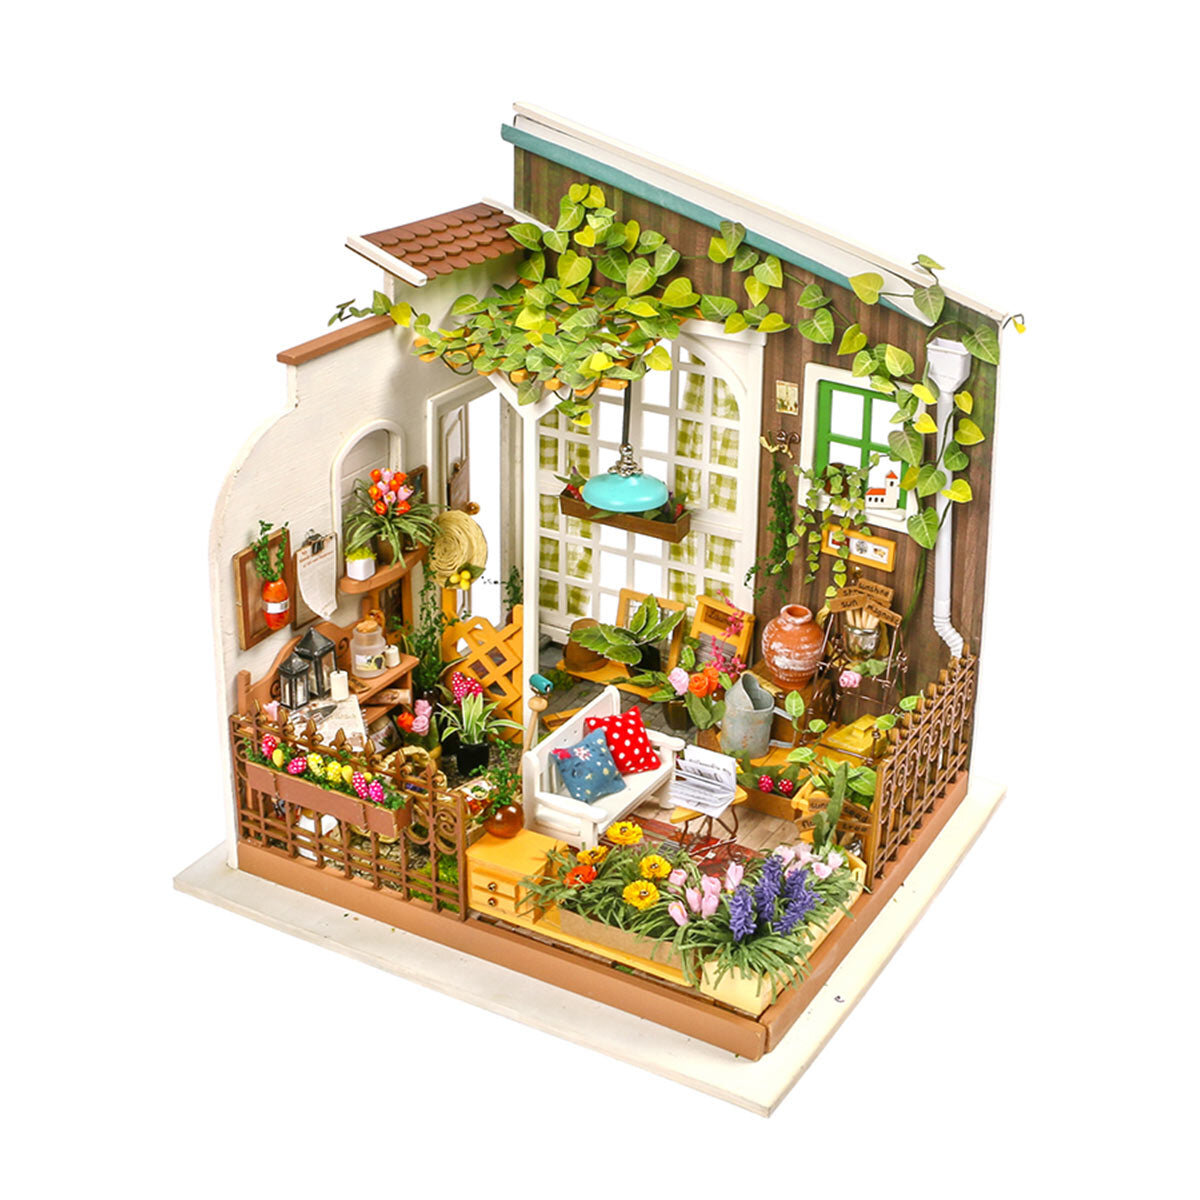 Miniatúrny domček - Záhrada pána Millera Rolife DG108